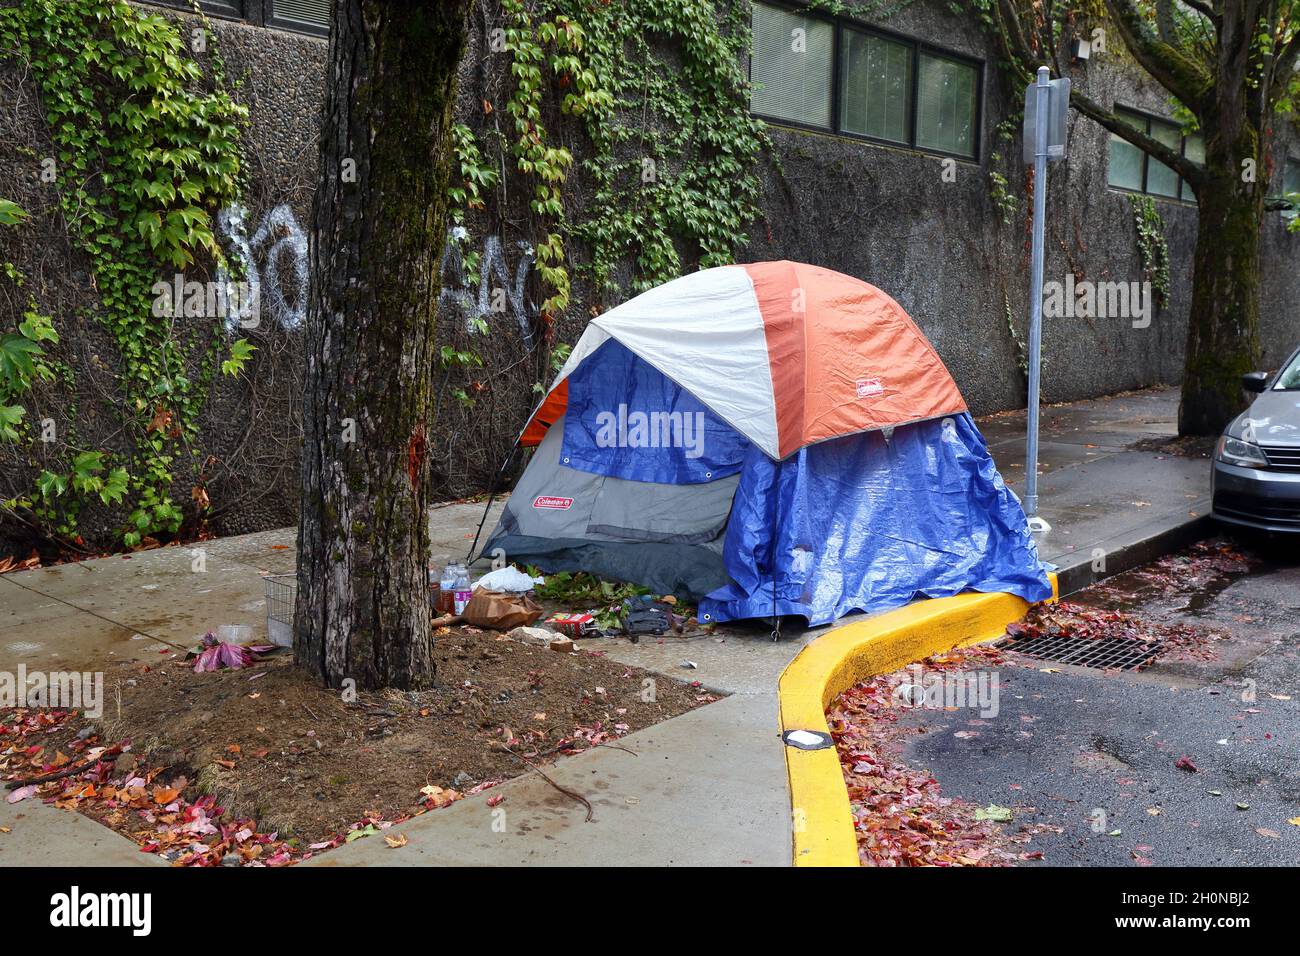 A tent on a sidewalk in the Nob Hill neighborhood of Portland, Oregon. Stock Photo